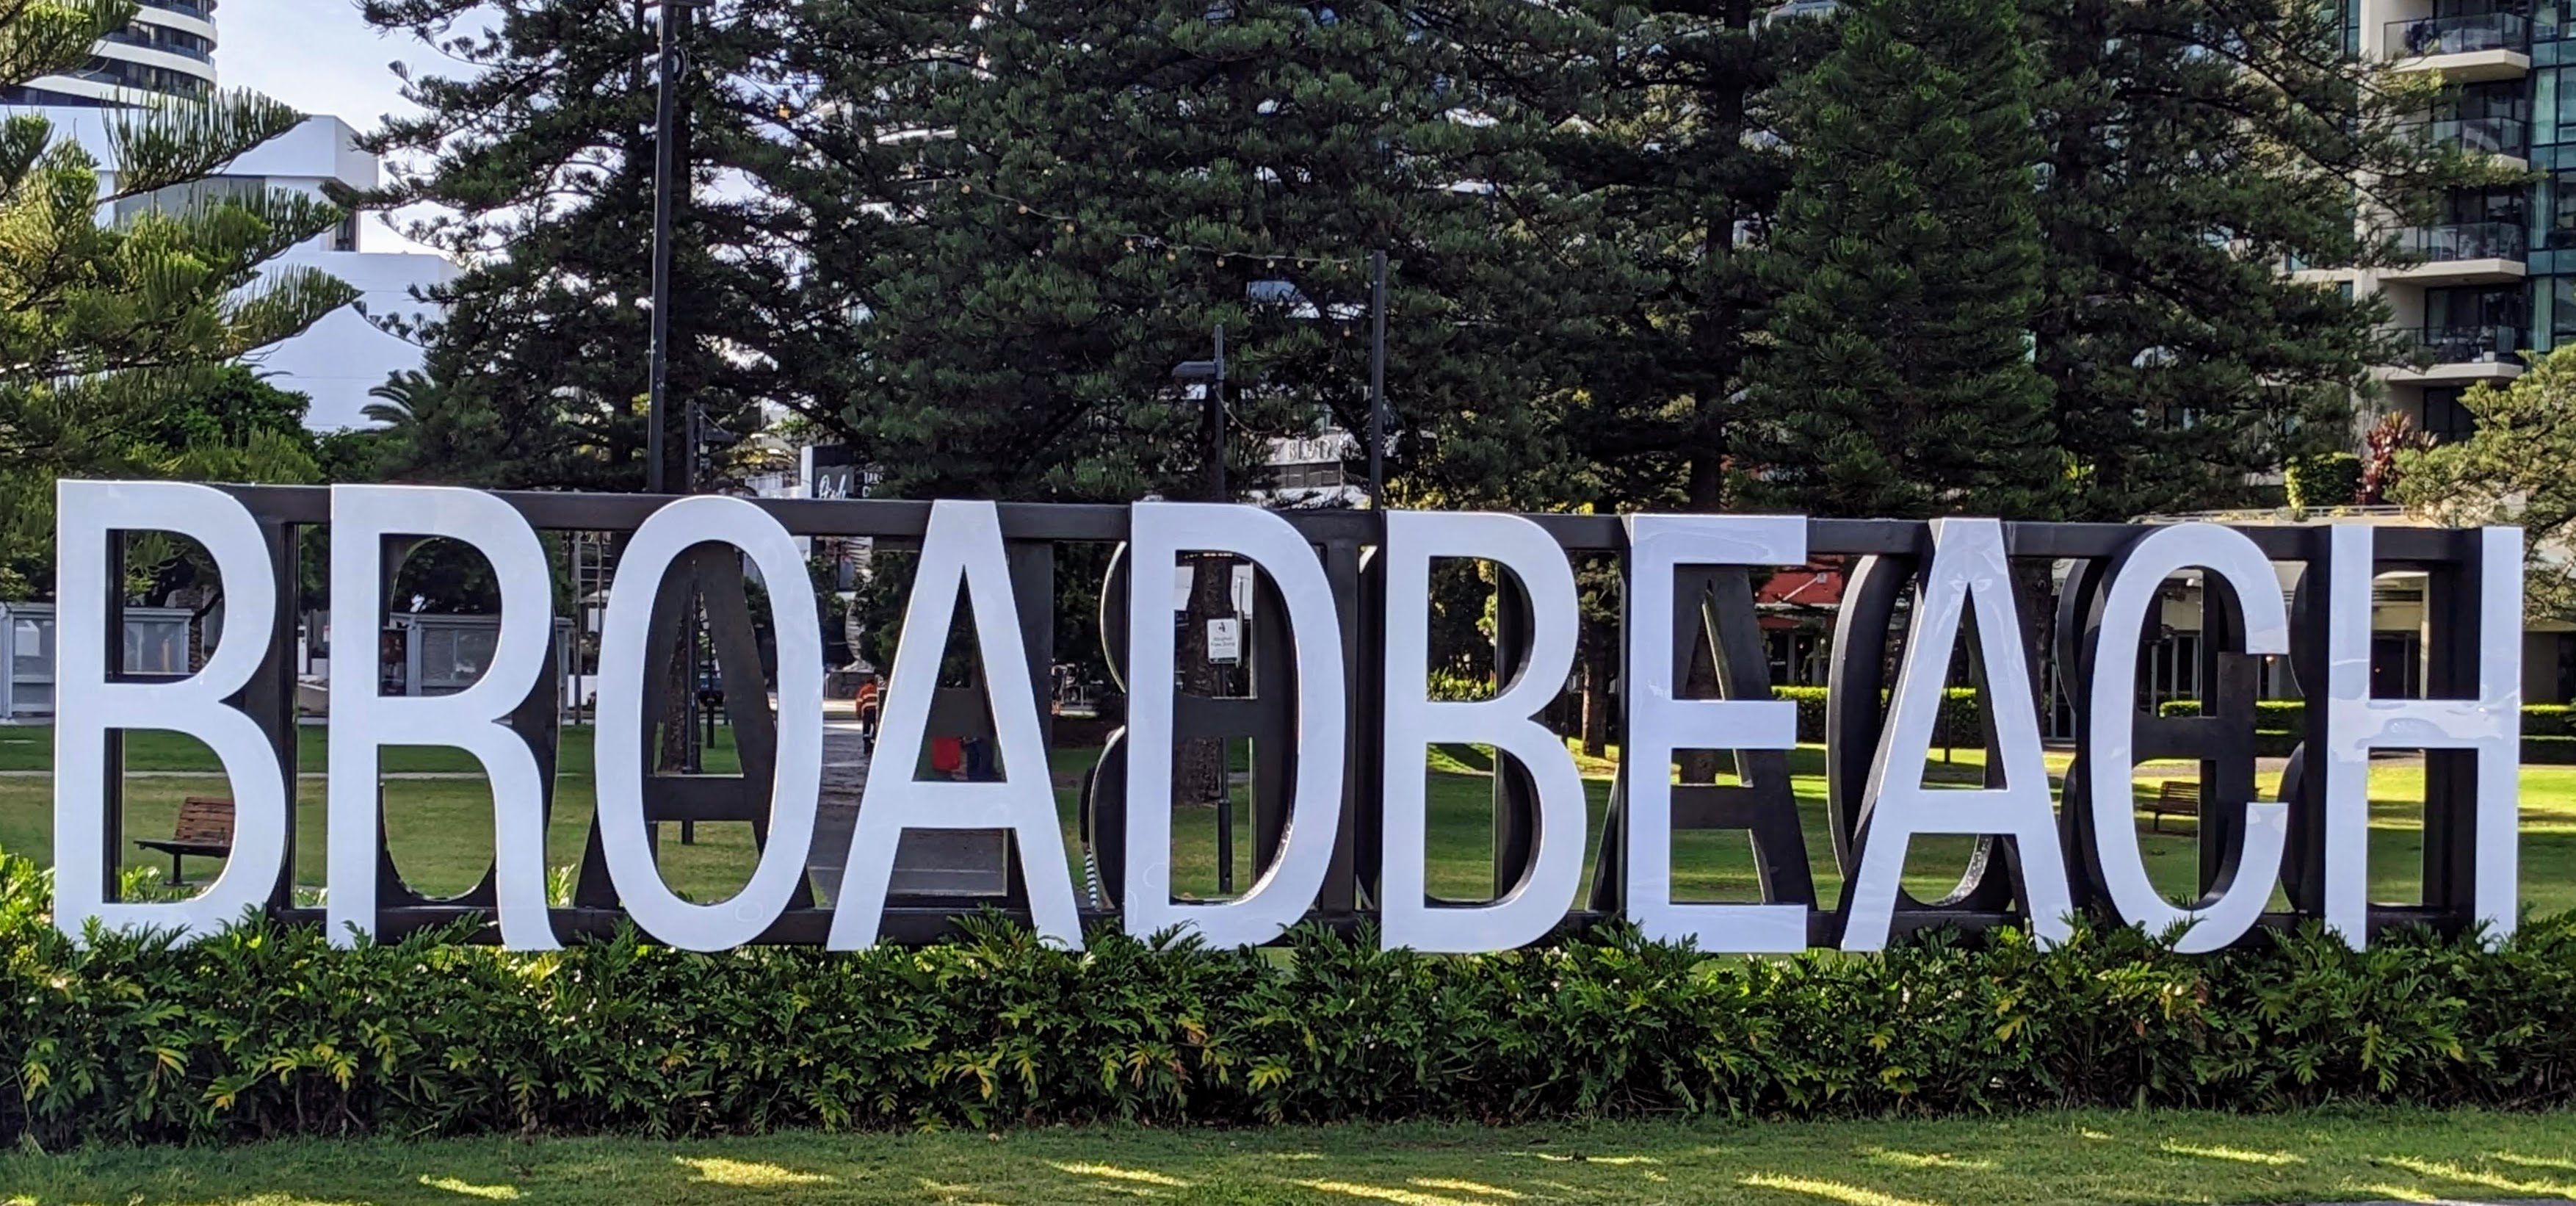 The Broadbeach sign located in Victoria Park